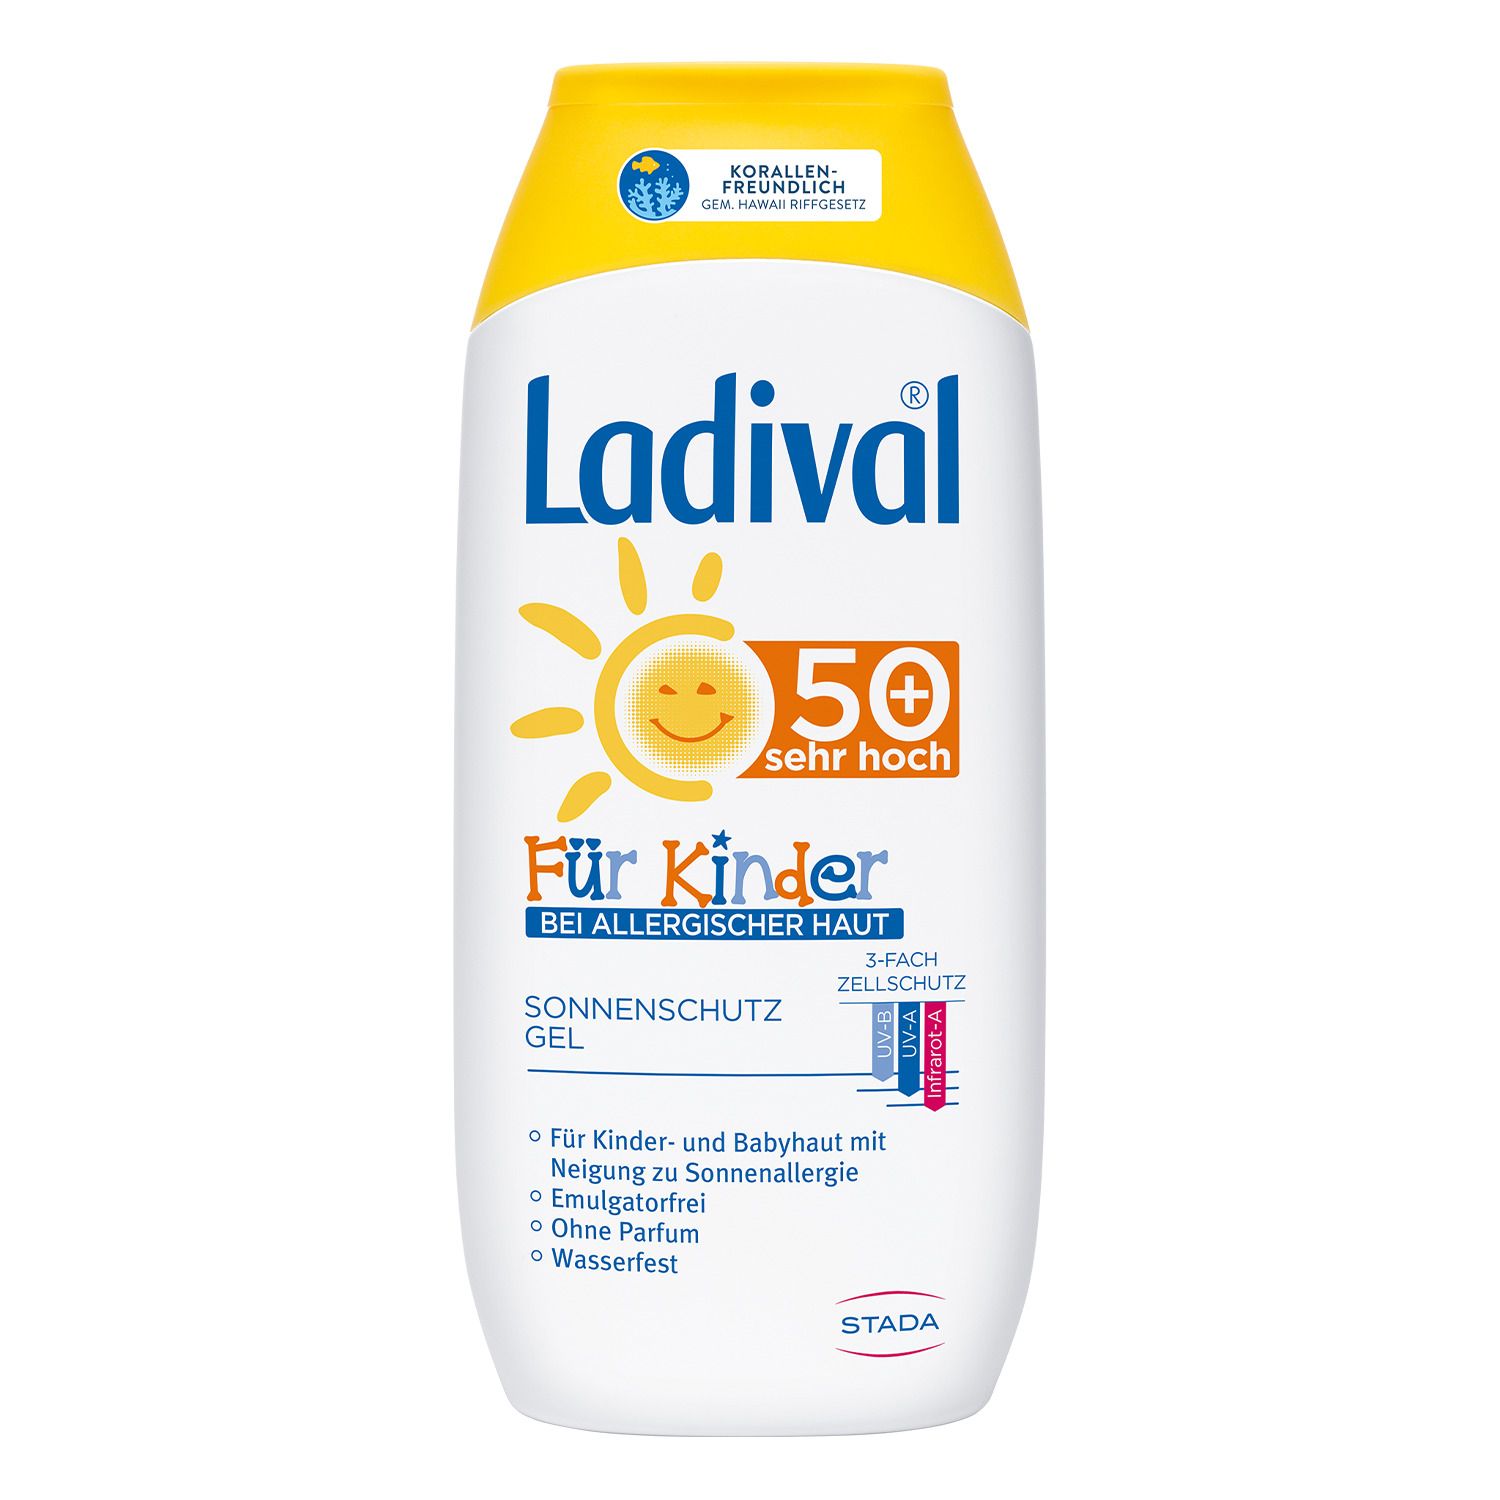 Ladival® Kinder Sonnenschutz Gel bei allergischer Haut LSF 50+ + Ladival Malbuch GRATIS